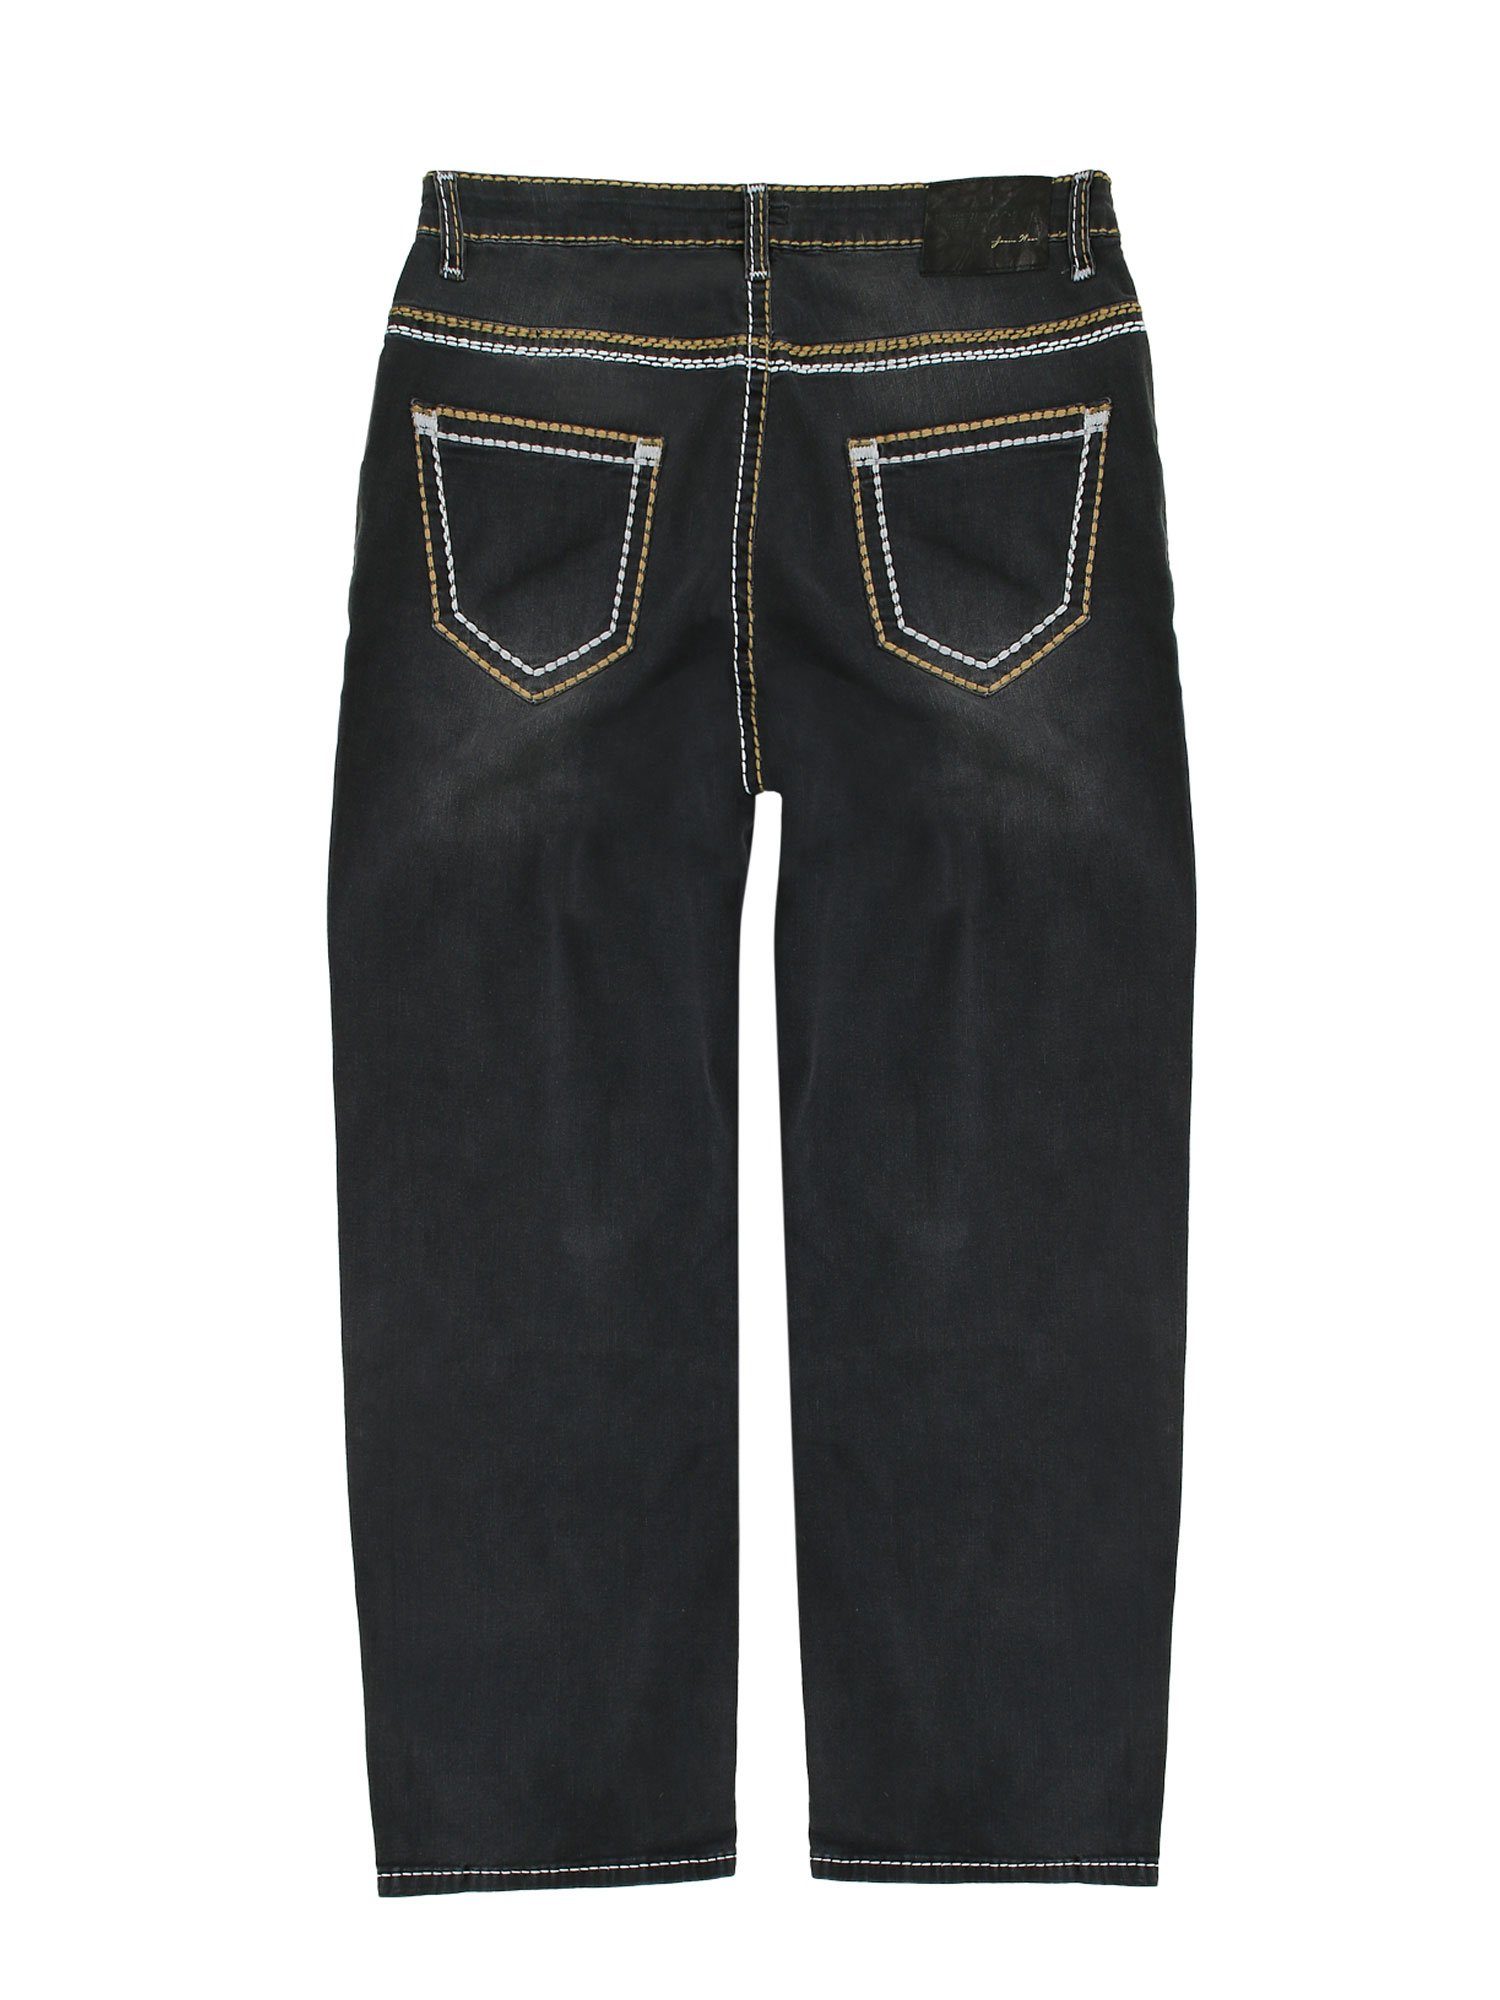 Jeanshose Übergrößen Lavecchia dicker Stretch Herren mit Comfort-fit-Jeans Naht & Elasthan LV-503 stone-black